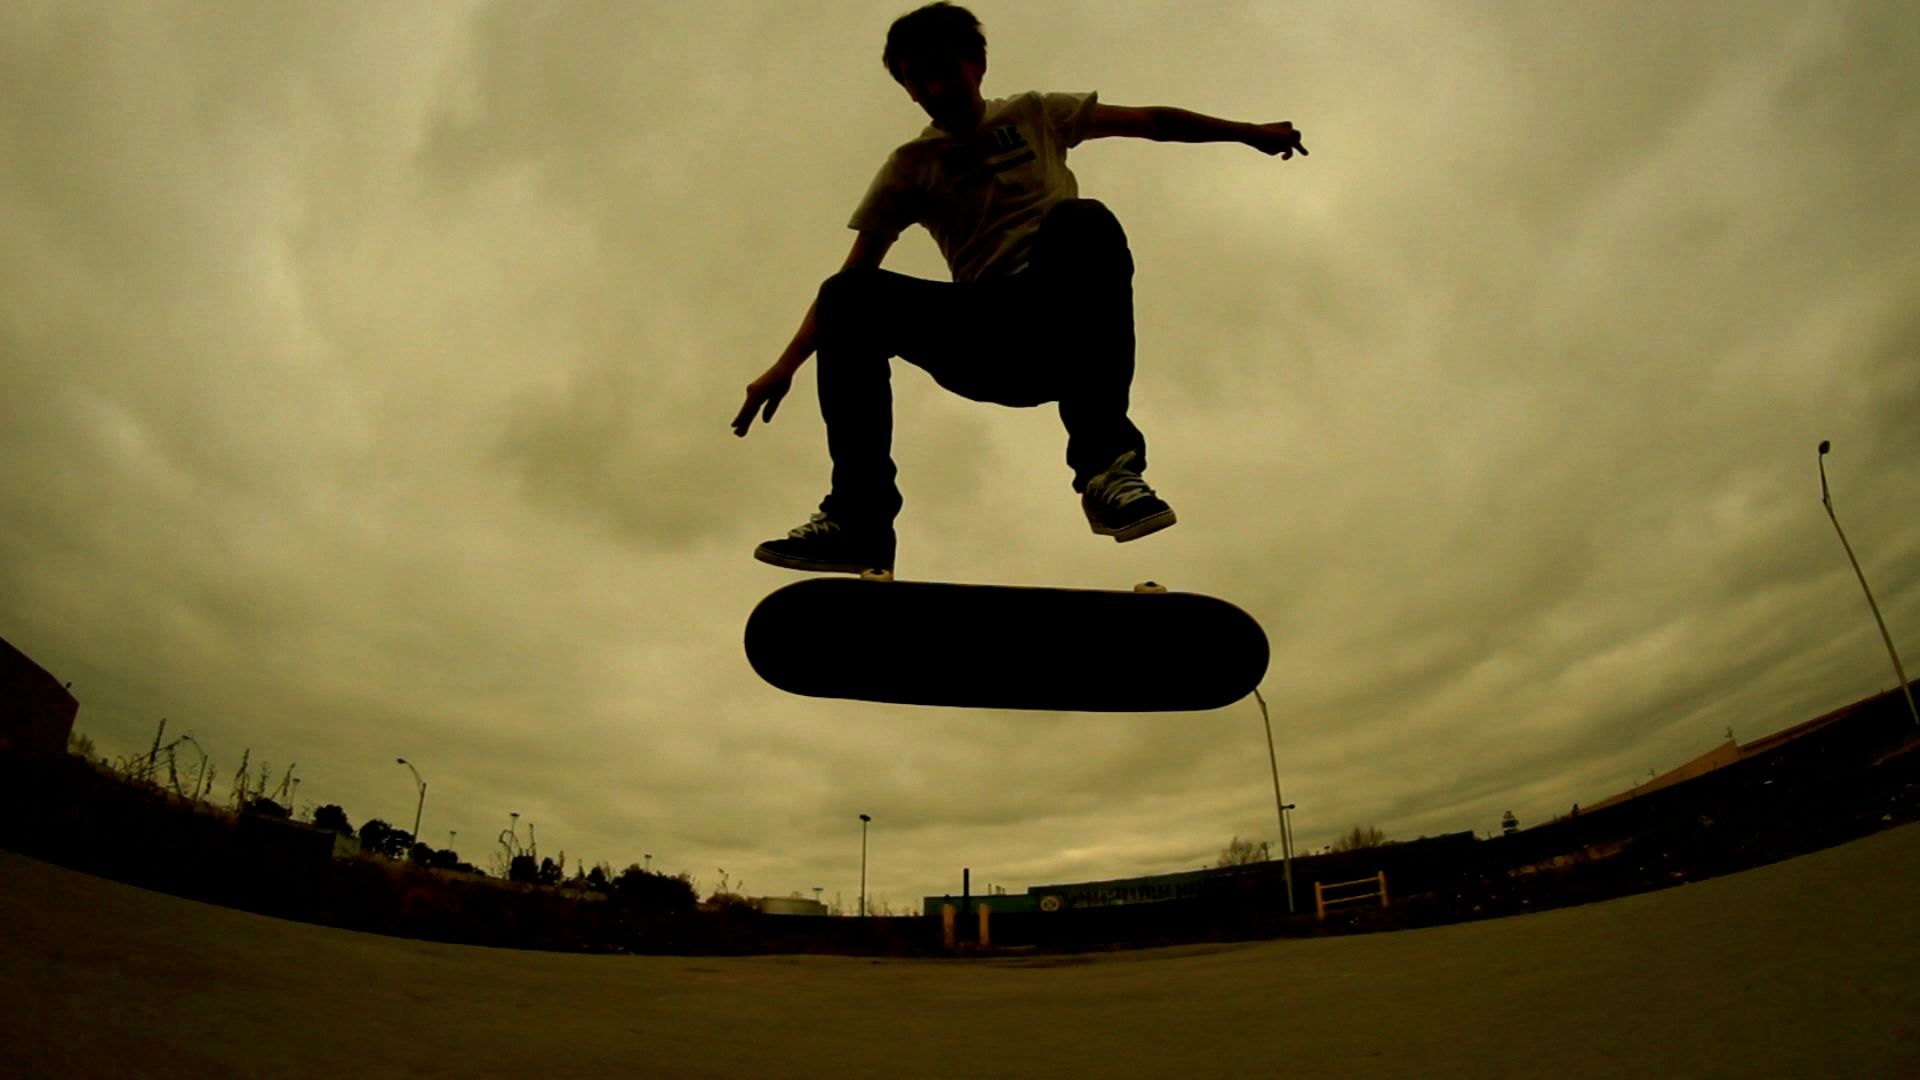 Skateboard Kickflip Wallpaper Jpg